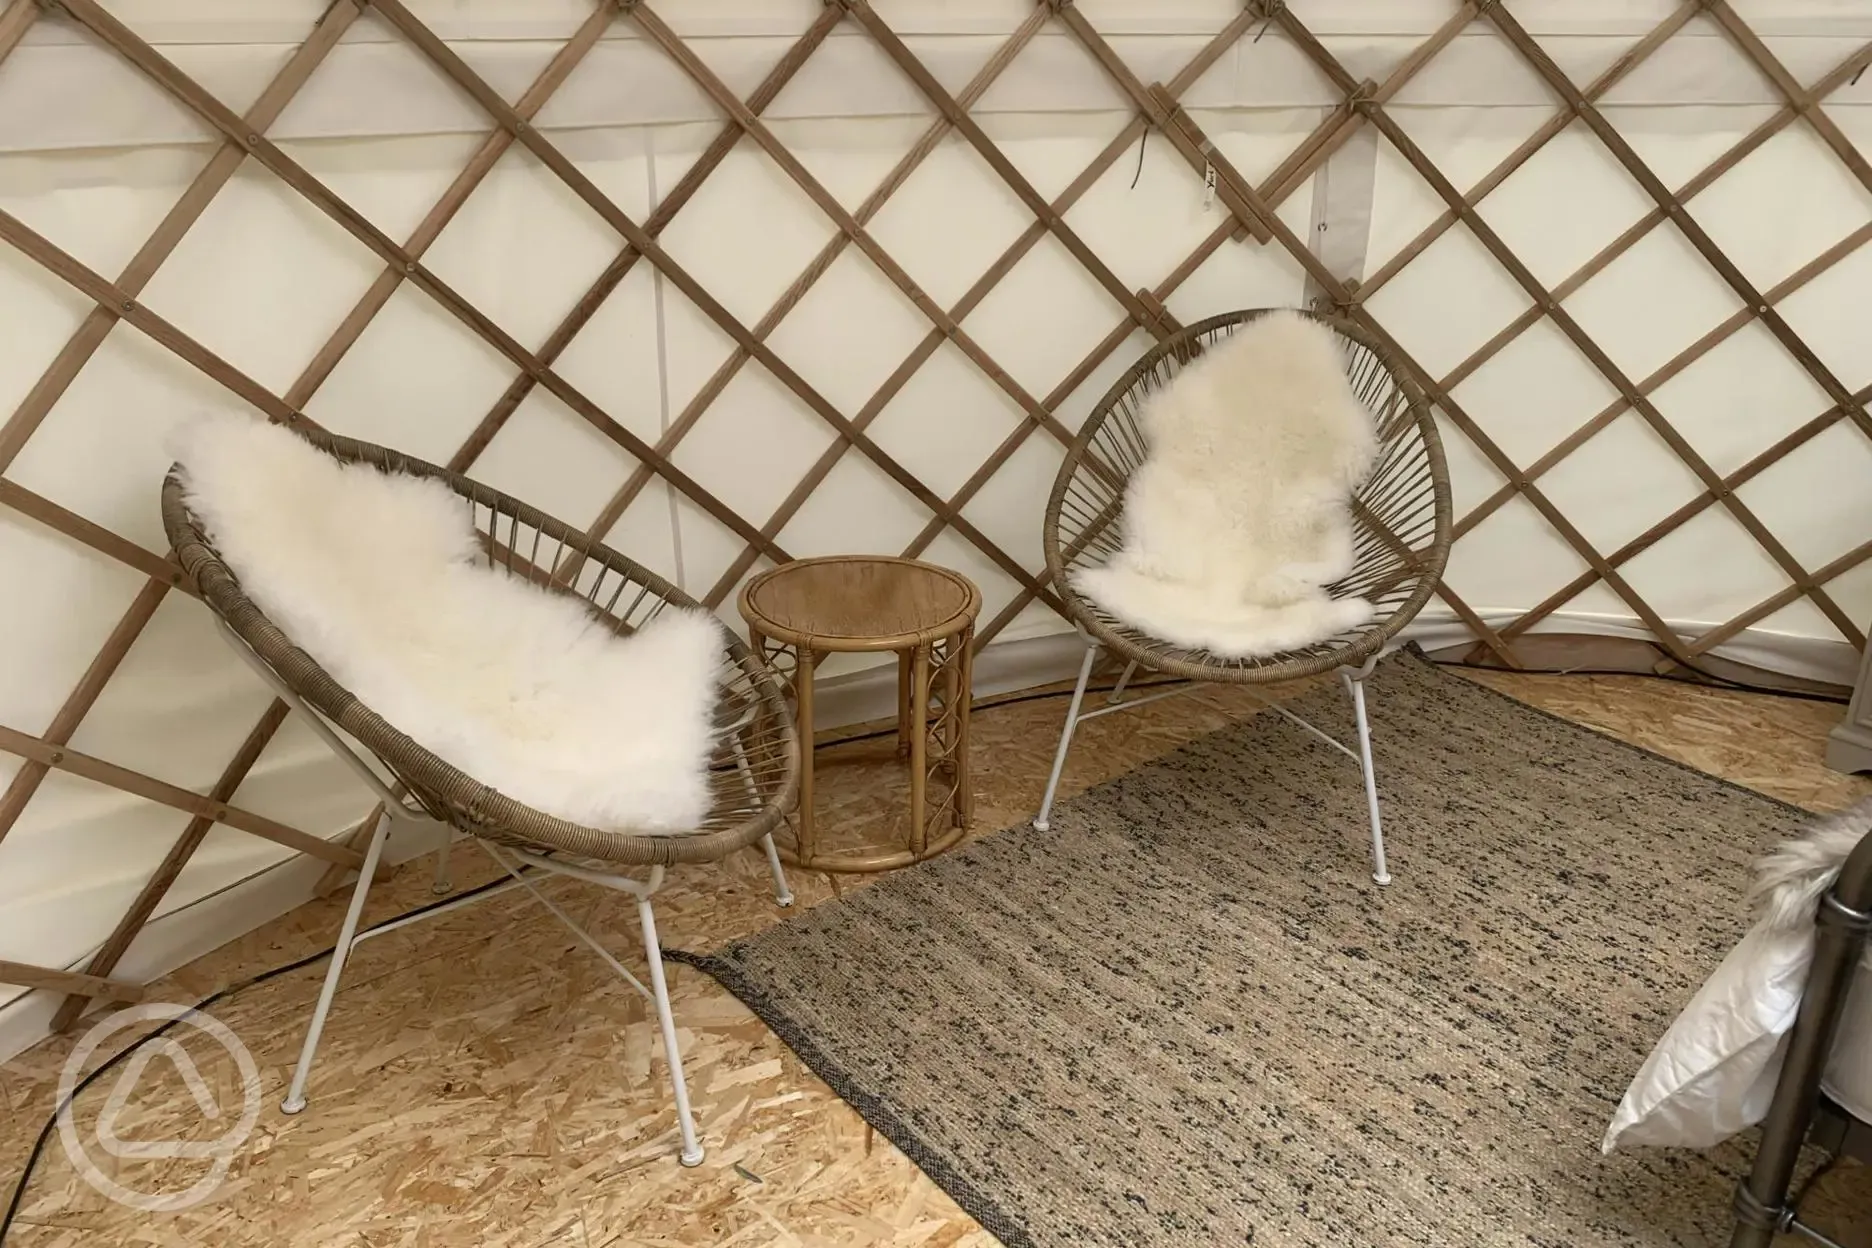 Hedgehog yurt interior